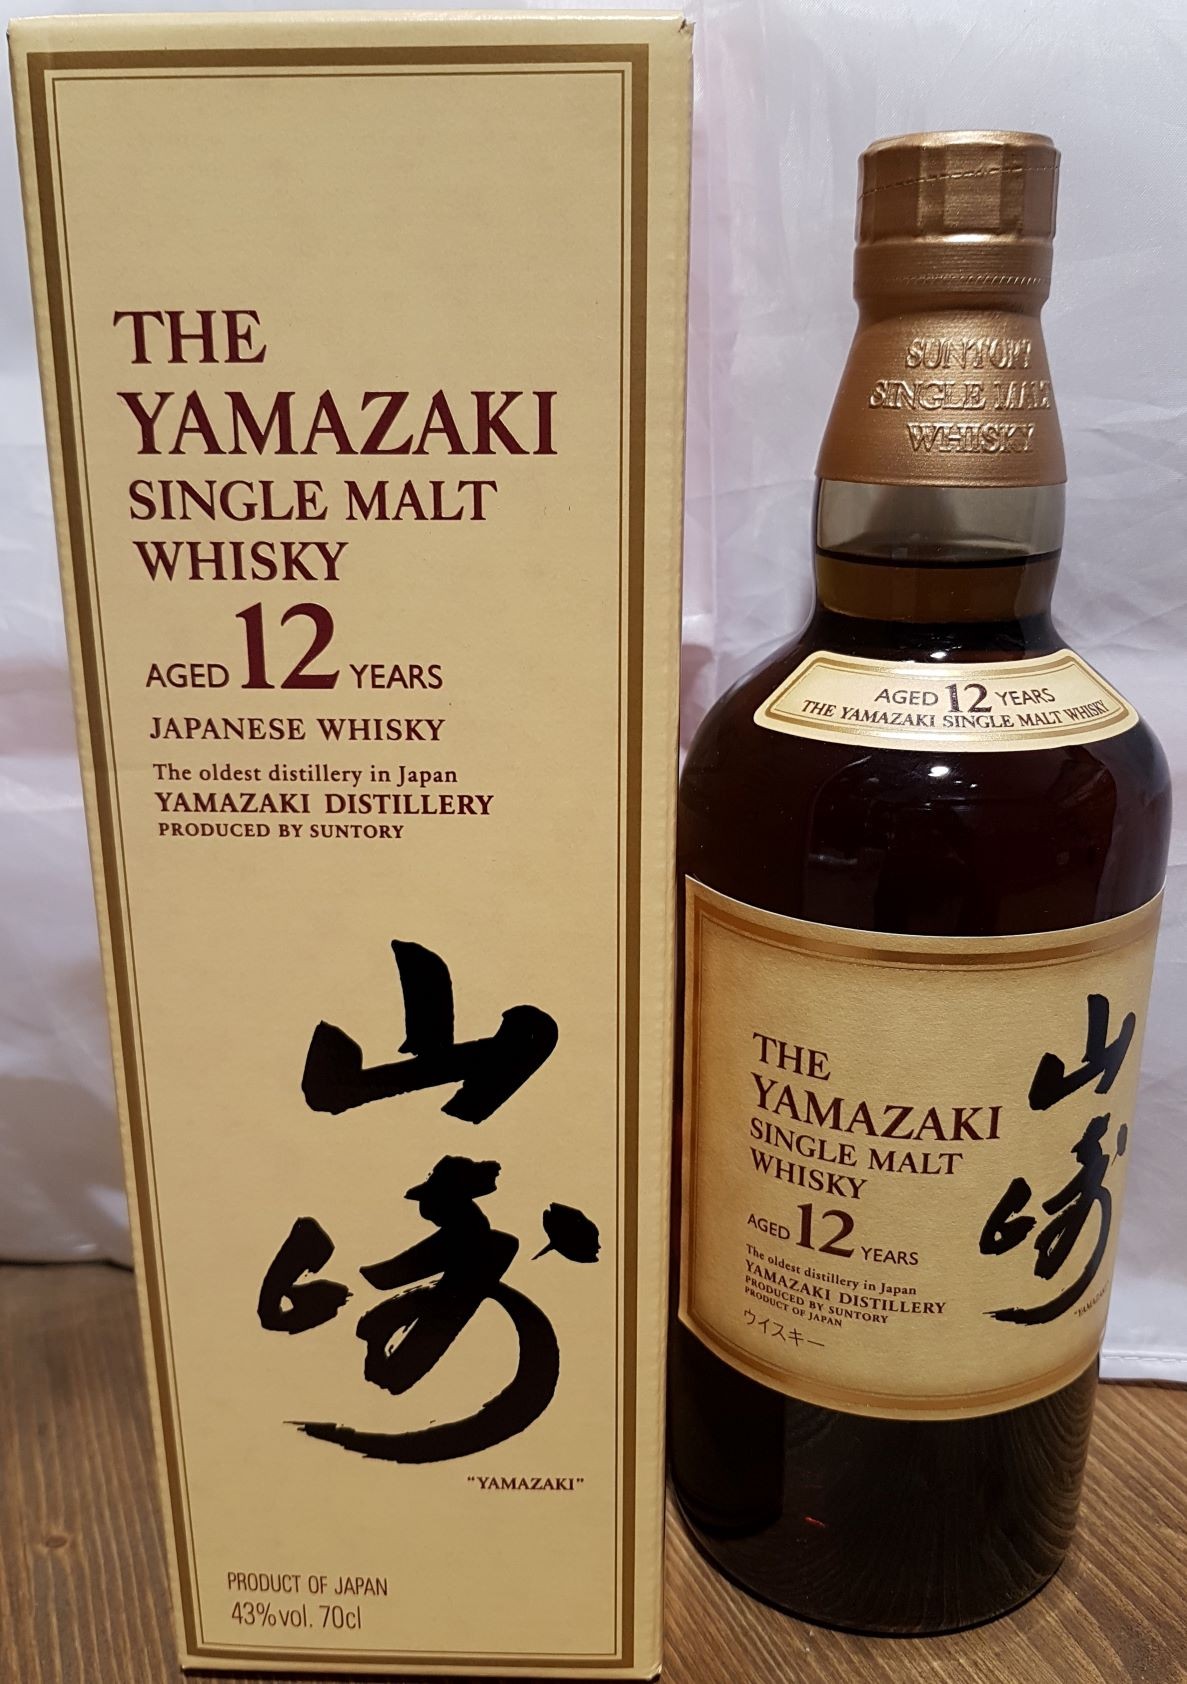 Whisky - The Yamazaki 12 years